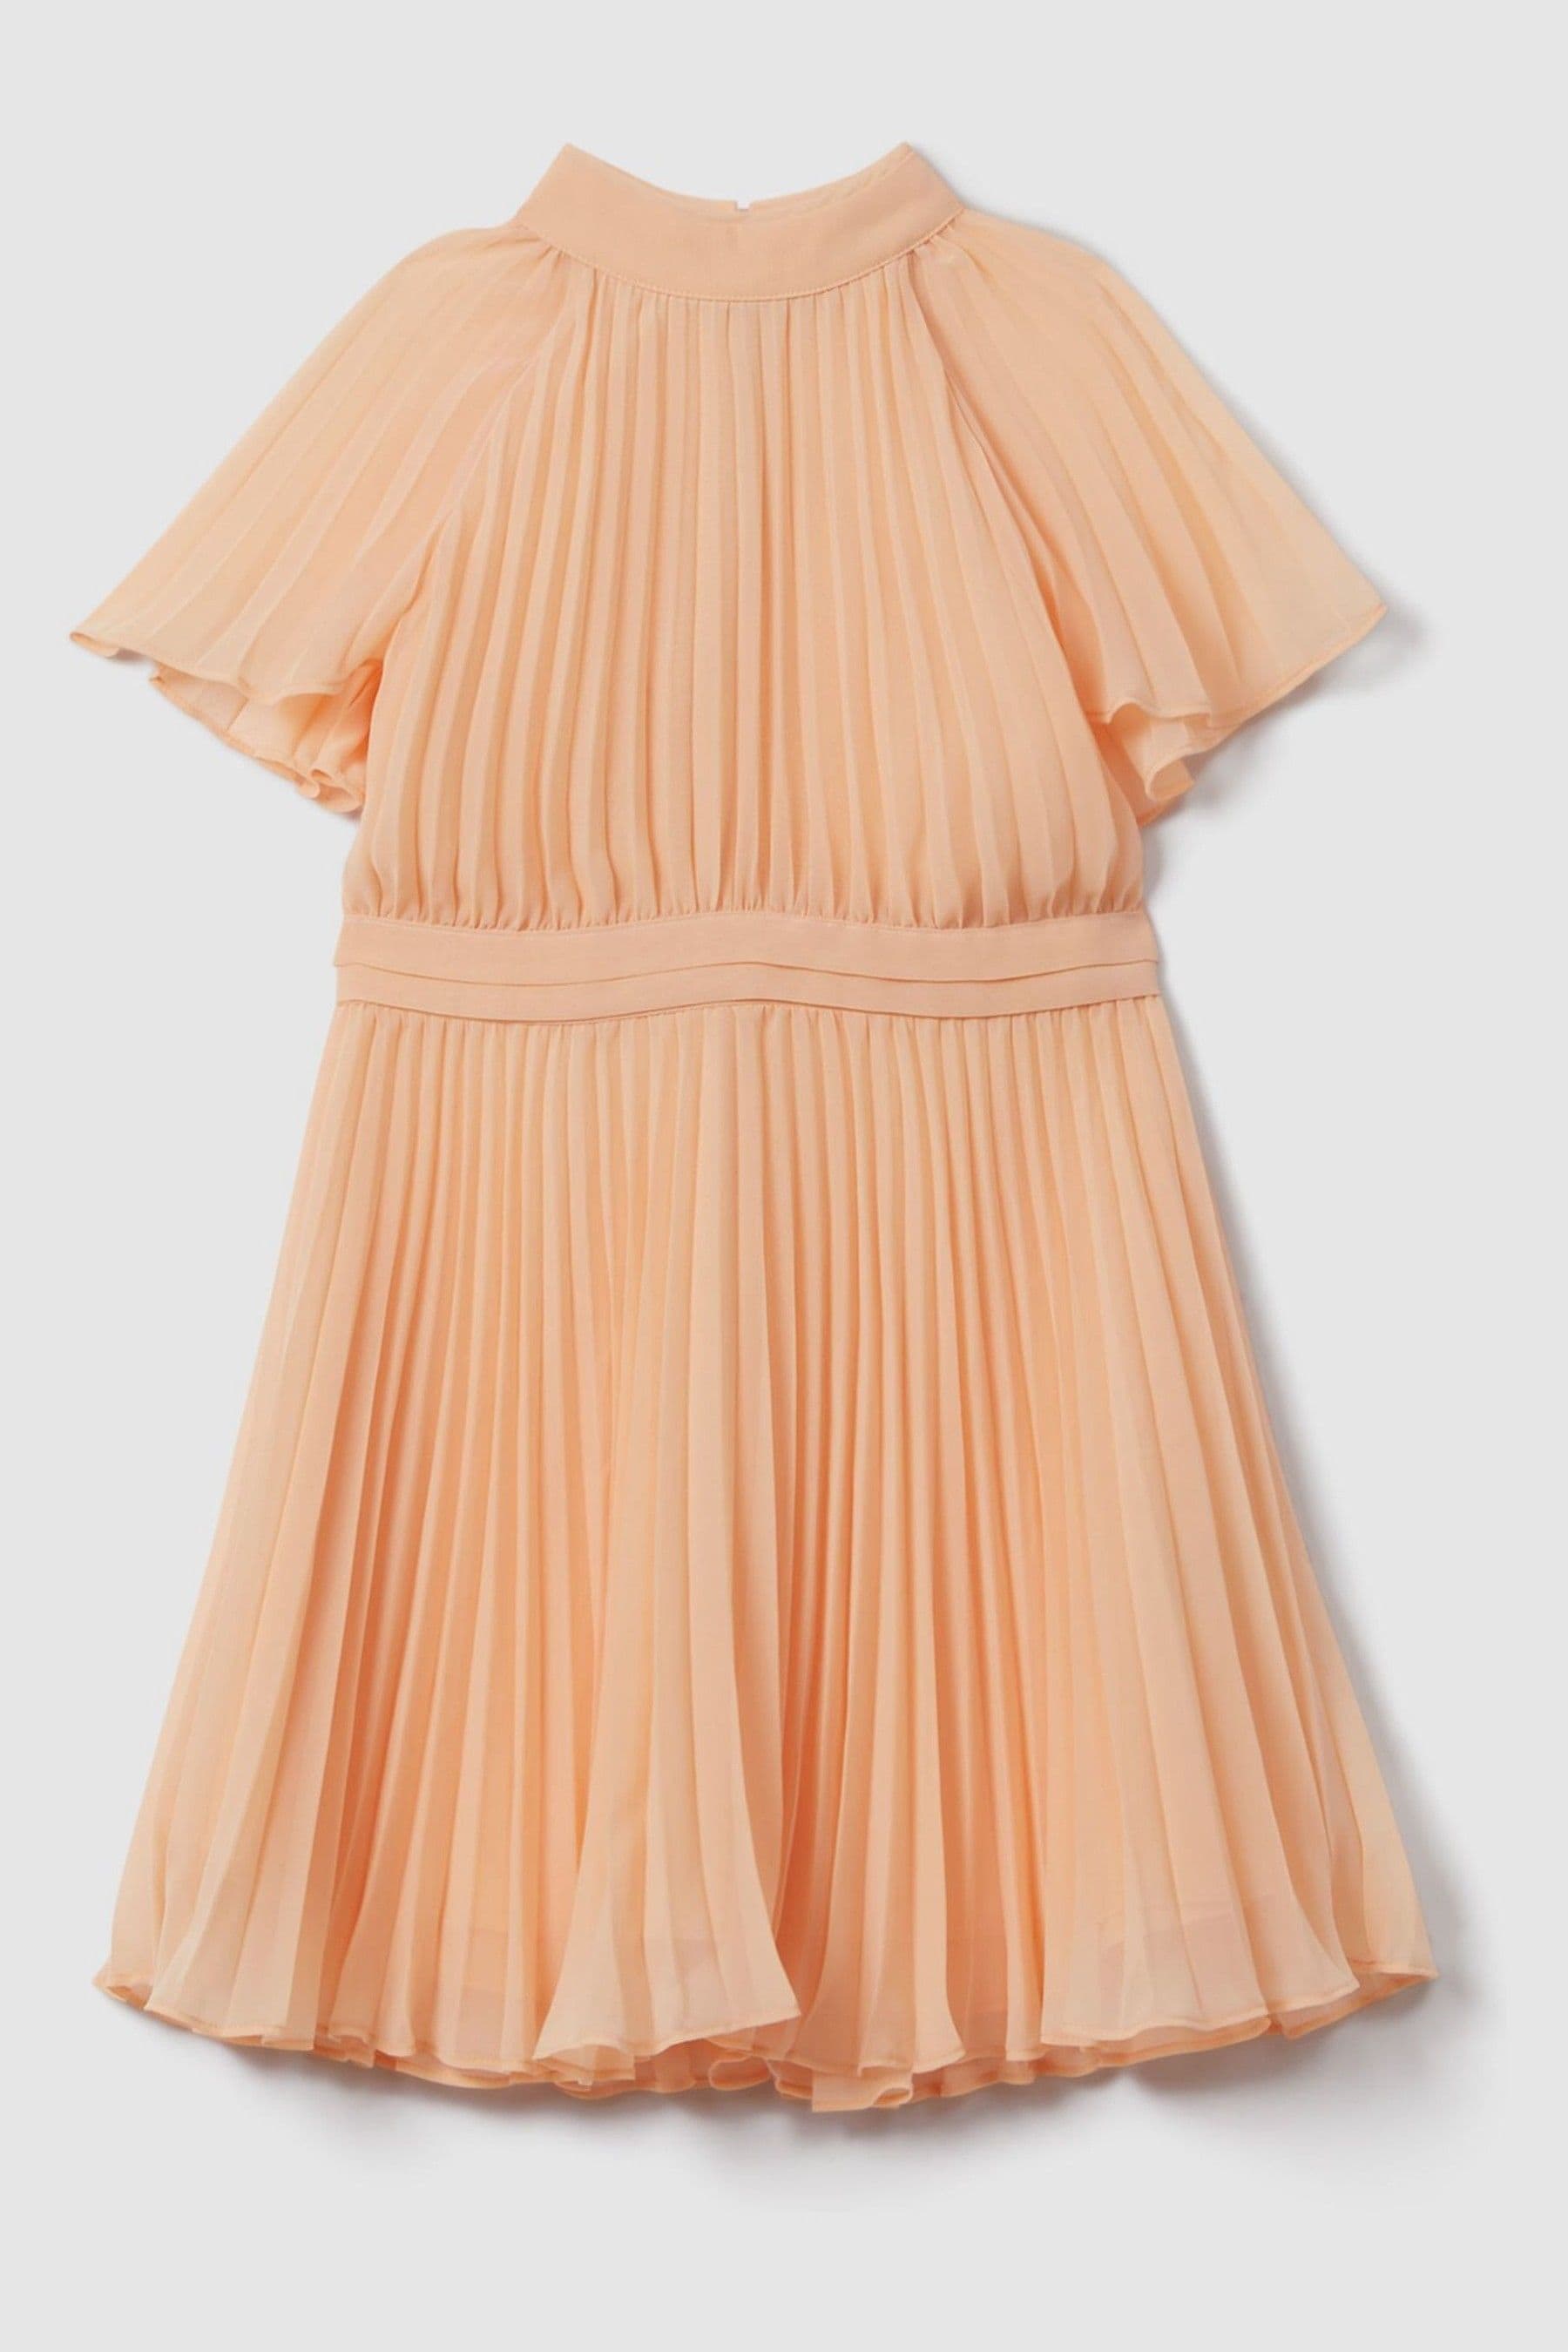 Reiss Verity - Apricot Teen Pleated Cape Sleeve Dress, Uk 13-14 Yrs